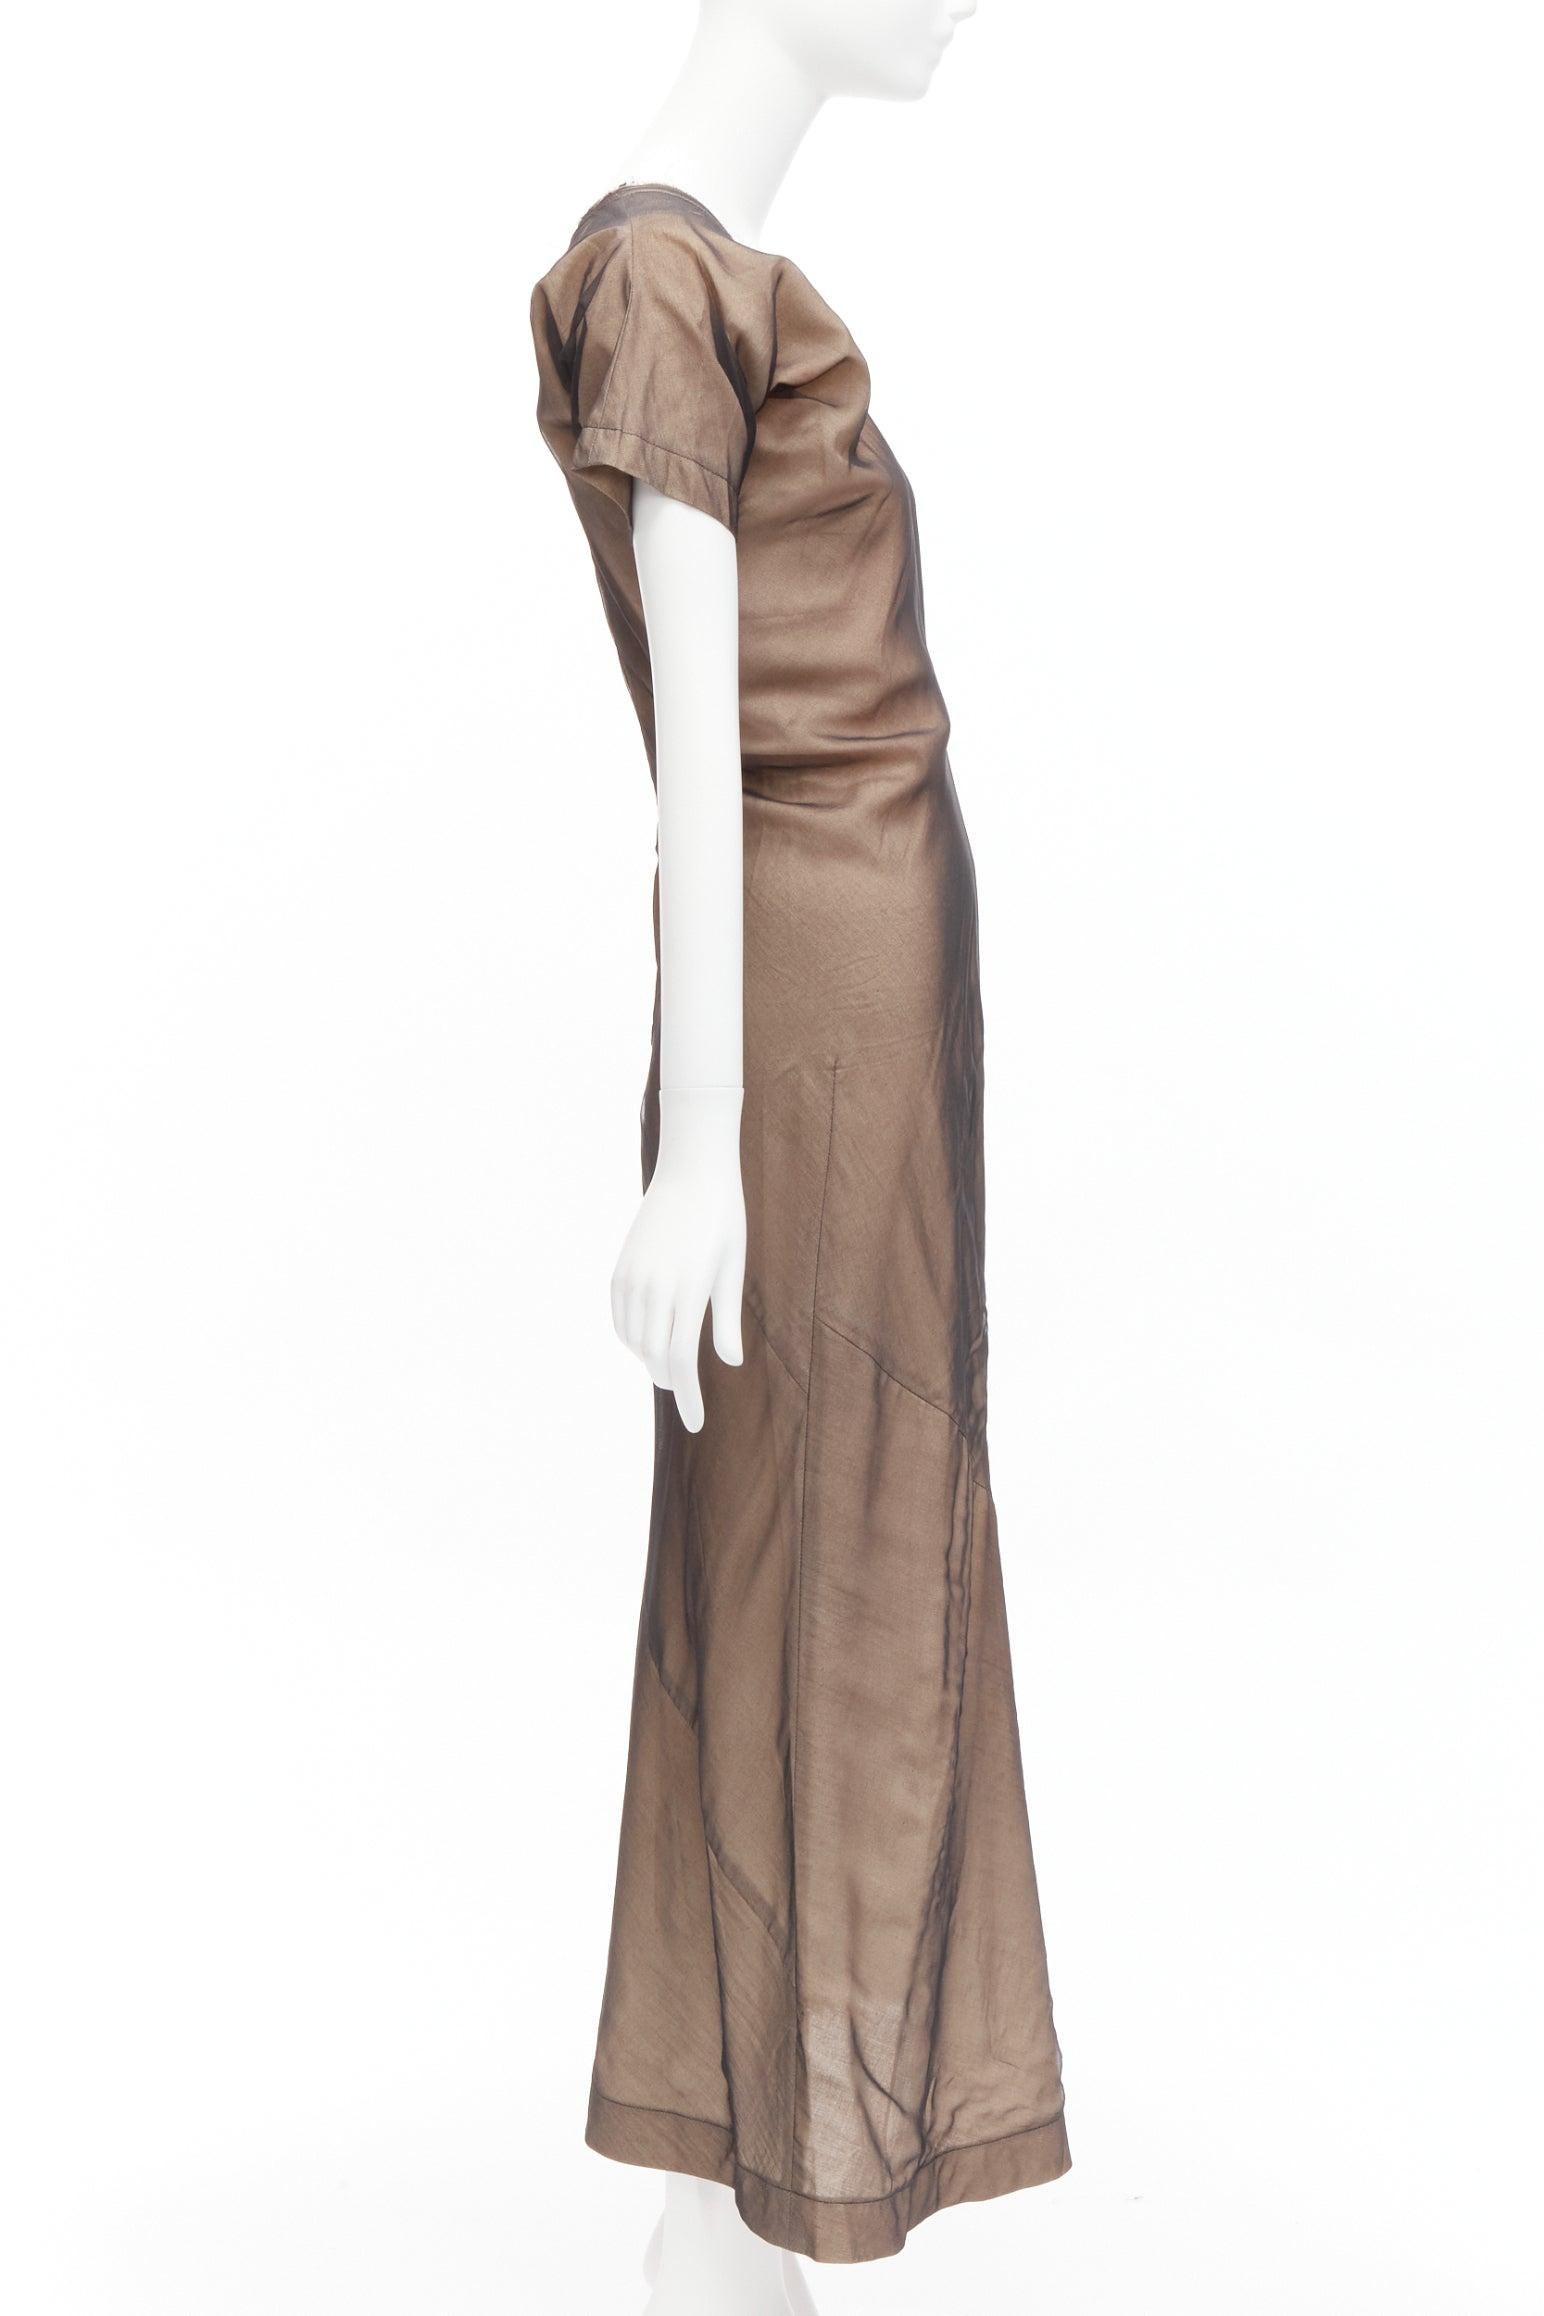 Women's COMME DES GARCONS Vintage nude sheer overlay A-line bias dress S Cindy Sherman For Sale